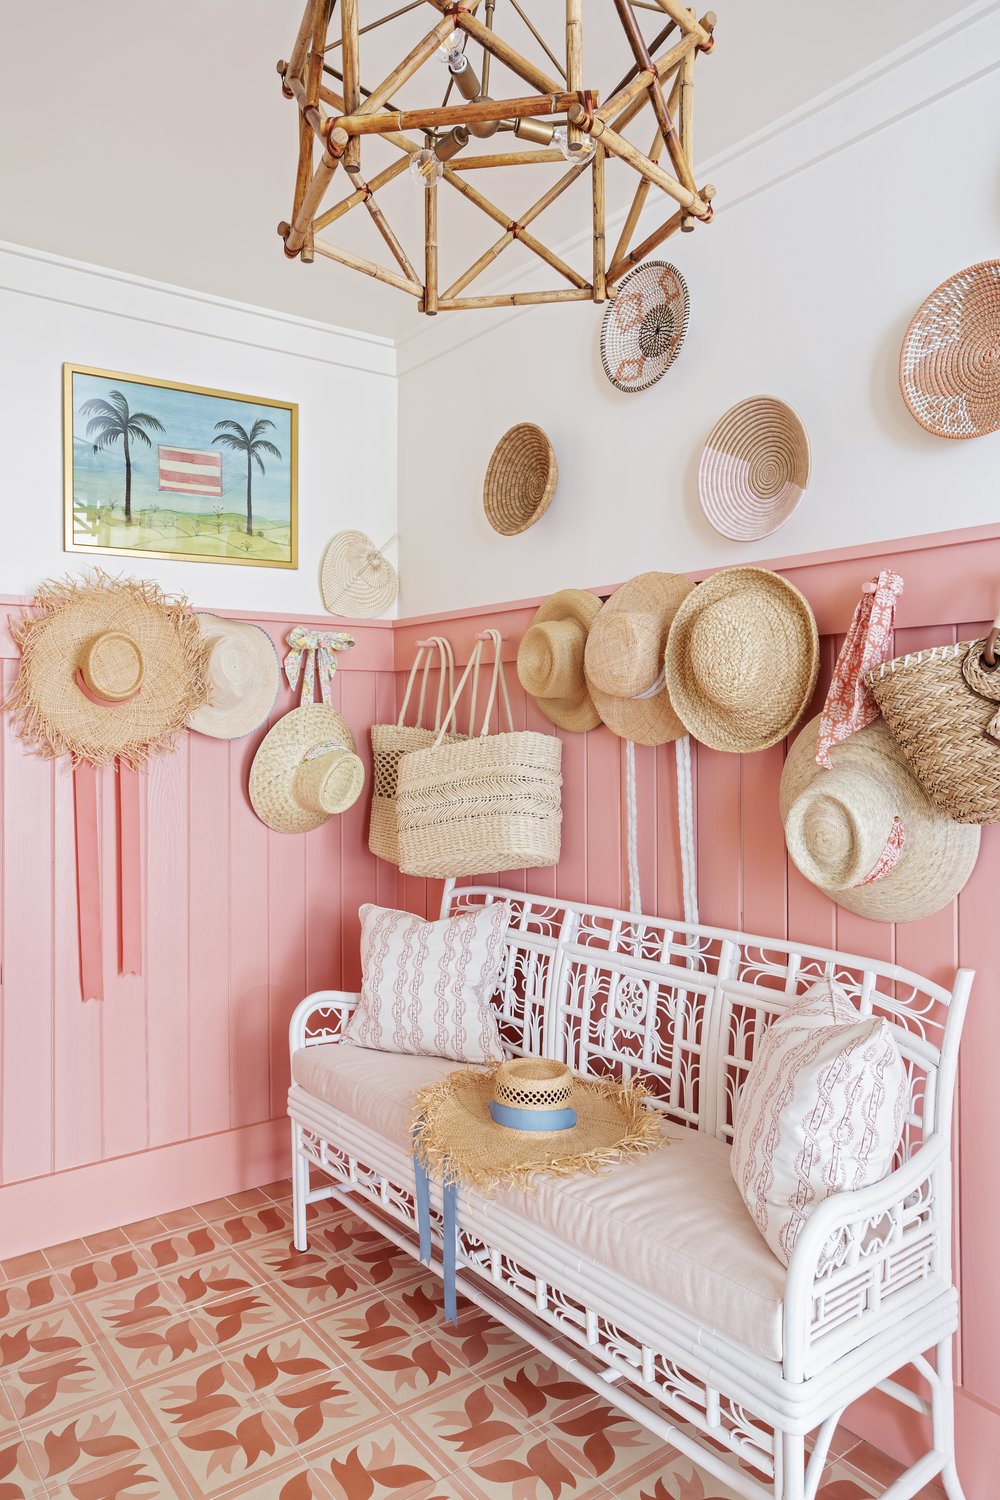 Kara Miller Interior Design - Brantley Photography - Sullivan's Island home - entry - foyer - pink and white - bamboo chandelier